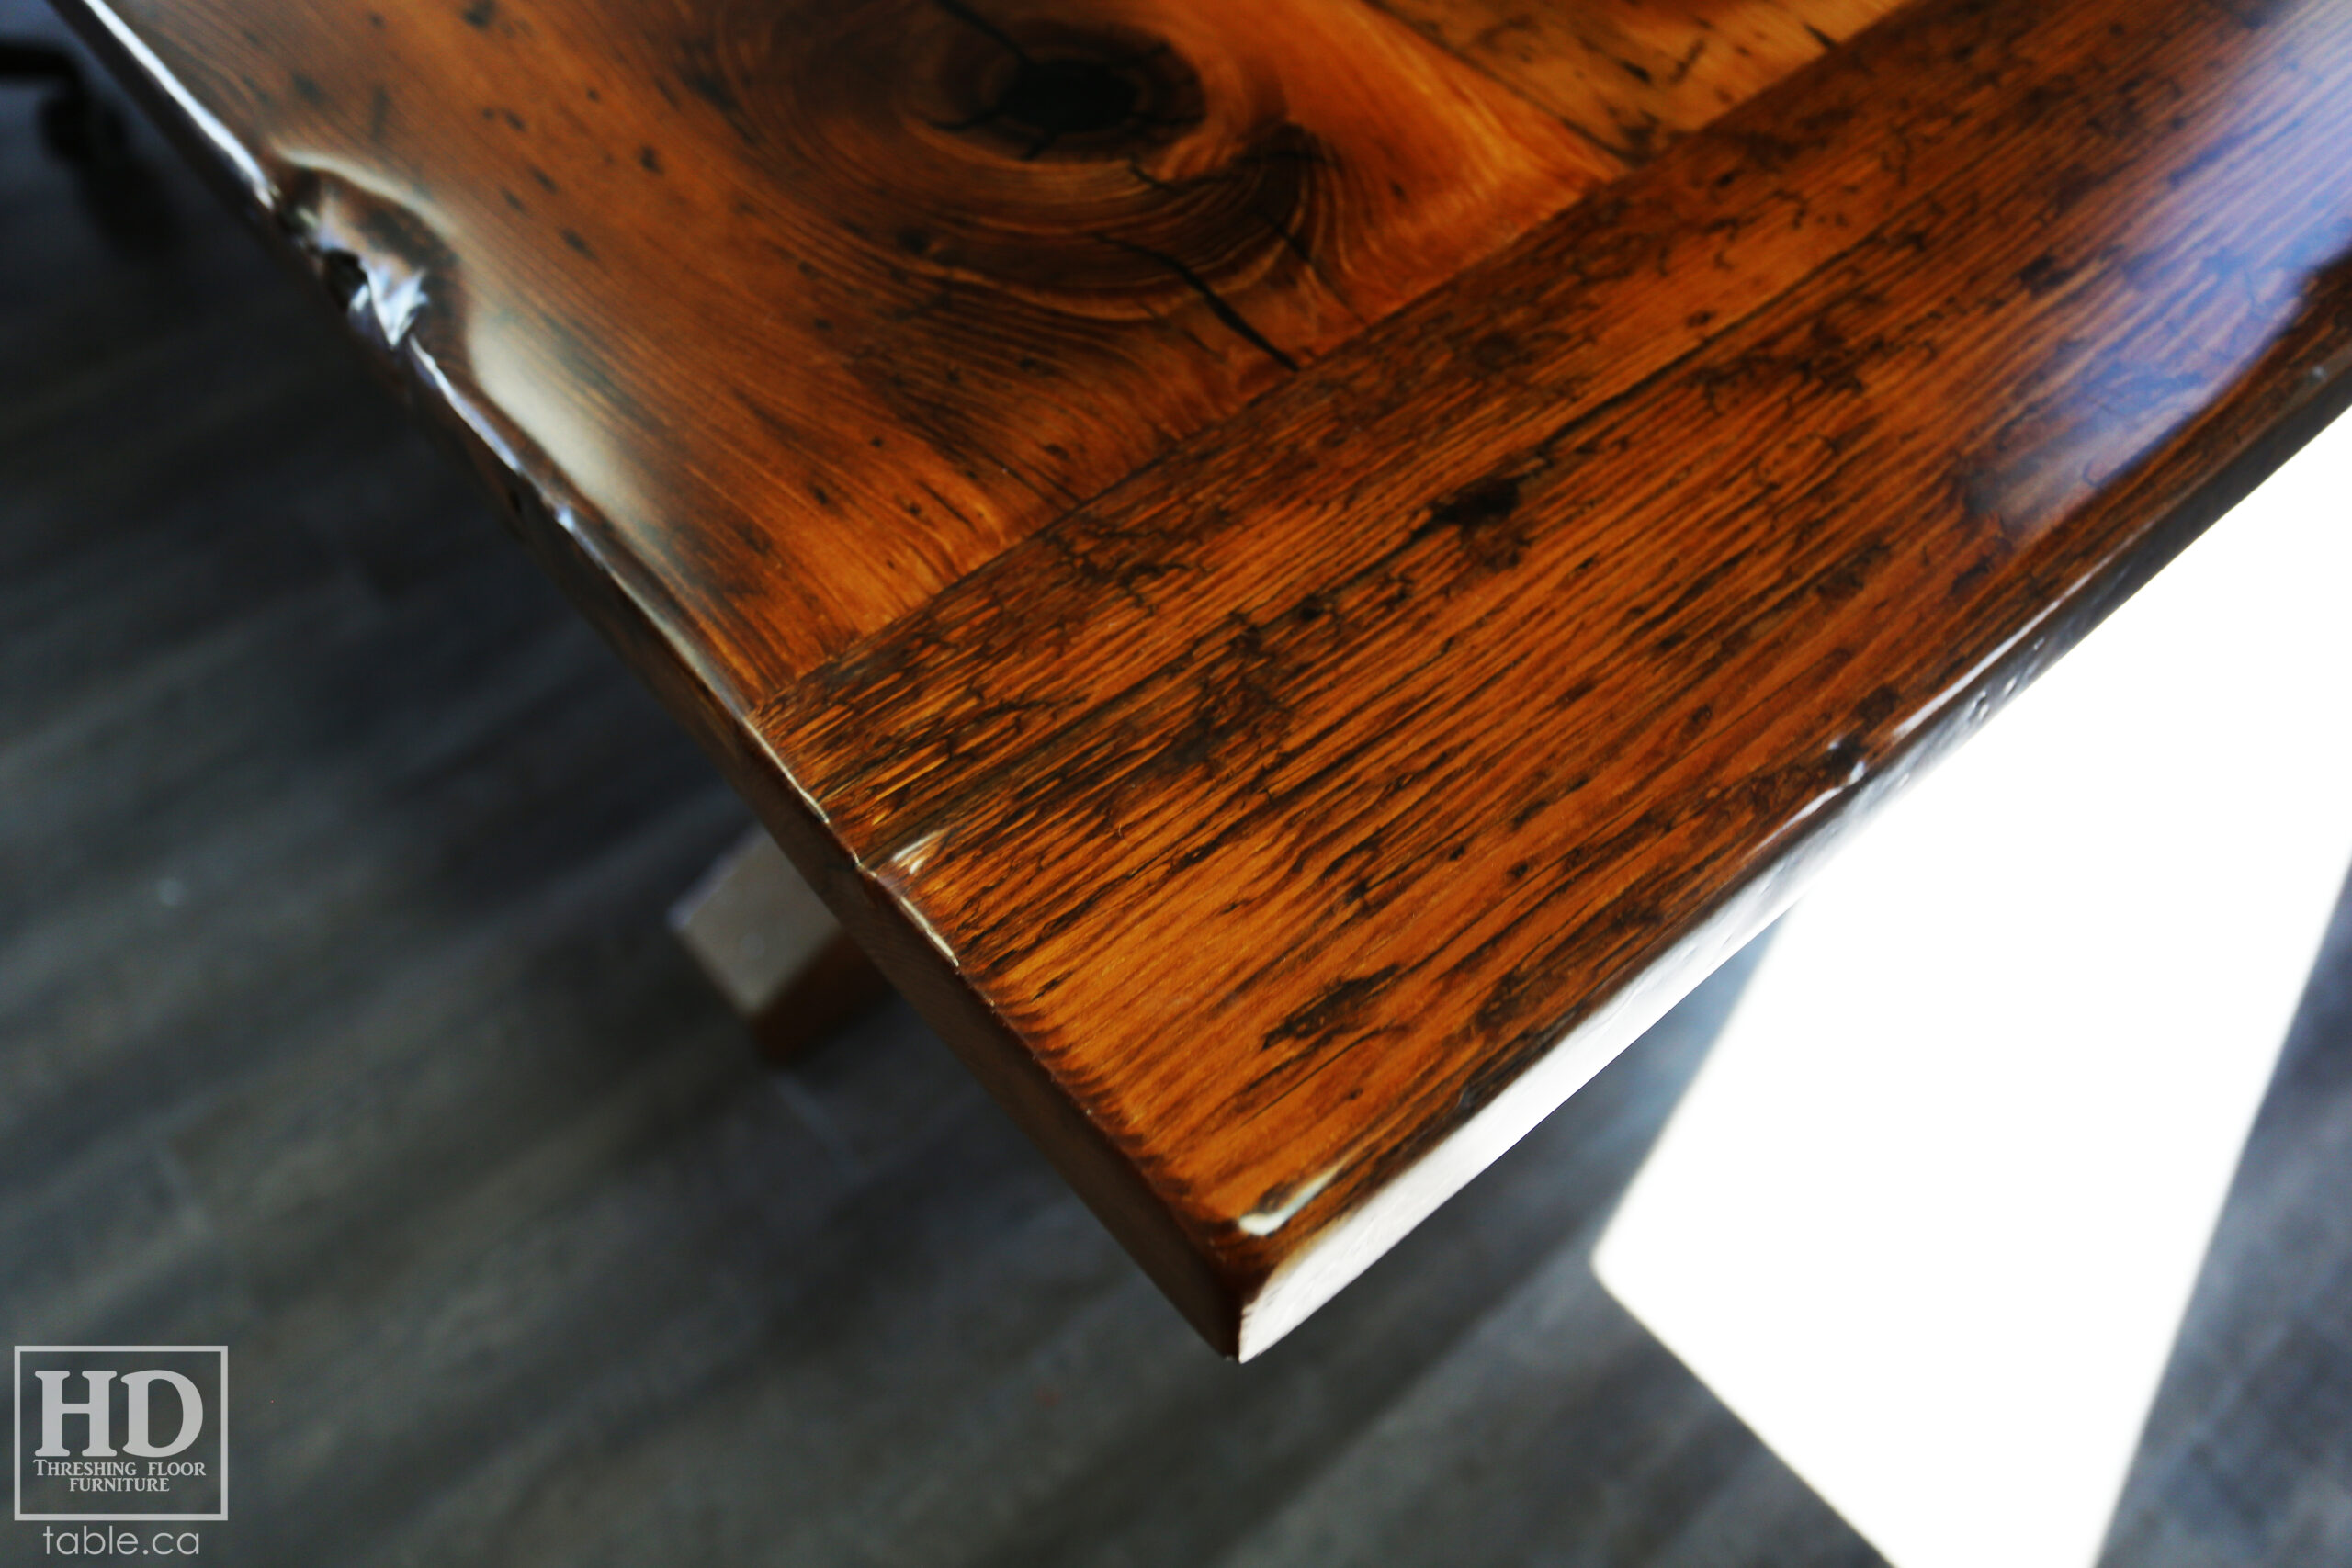 Boardroom Table by HD Threshing Floor Furniture / www.table.ca